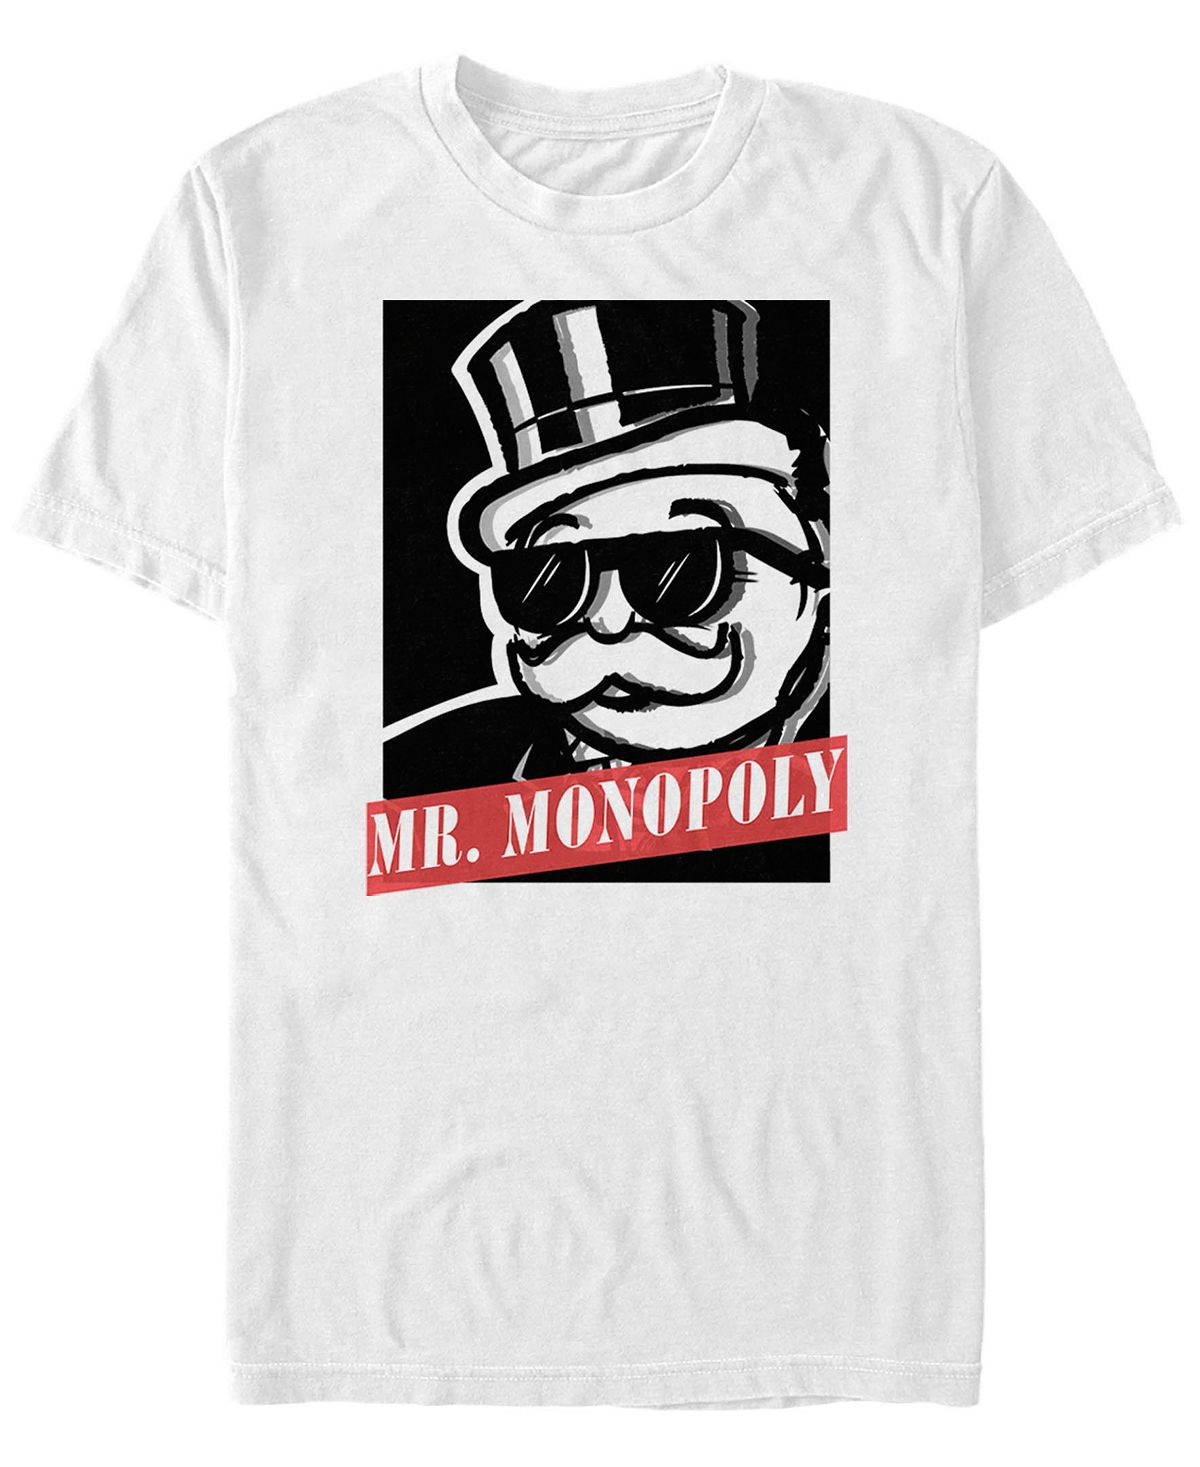 Мужская футболка с коротким рукавом mr monopoly с графическим плакатом Fifth Sun, белый мужская футболка с коротким рукавом monopoly hustle hard fifth sun синий